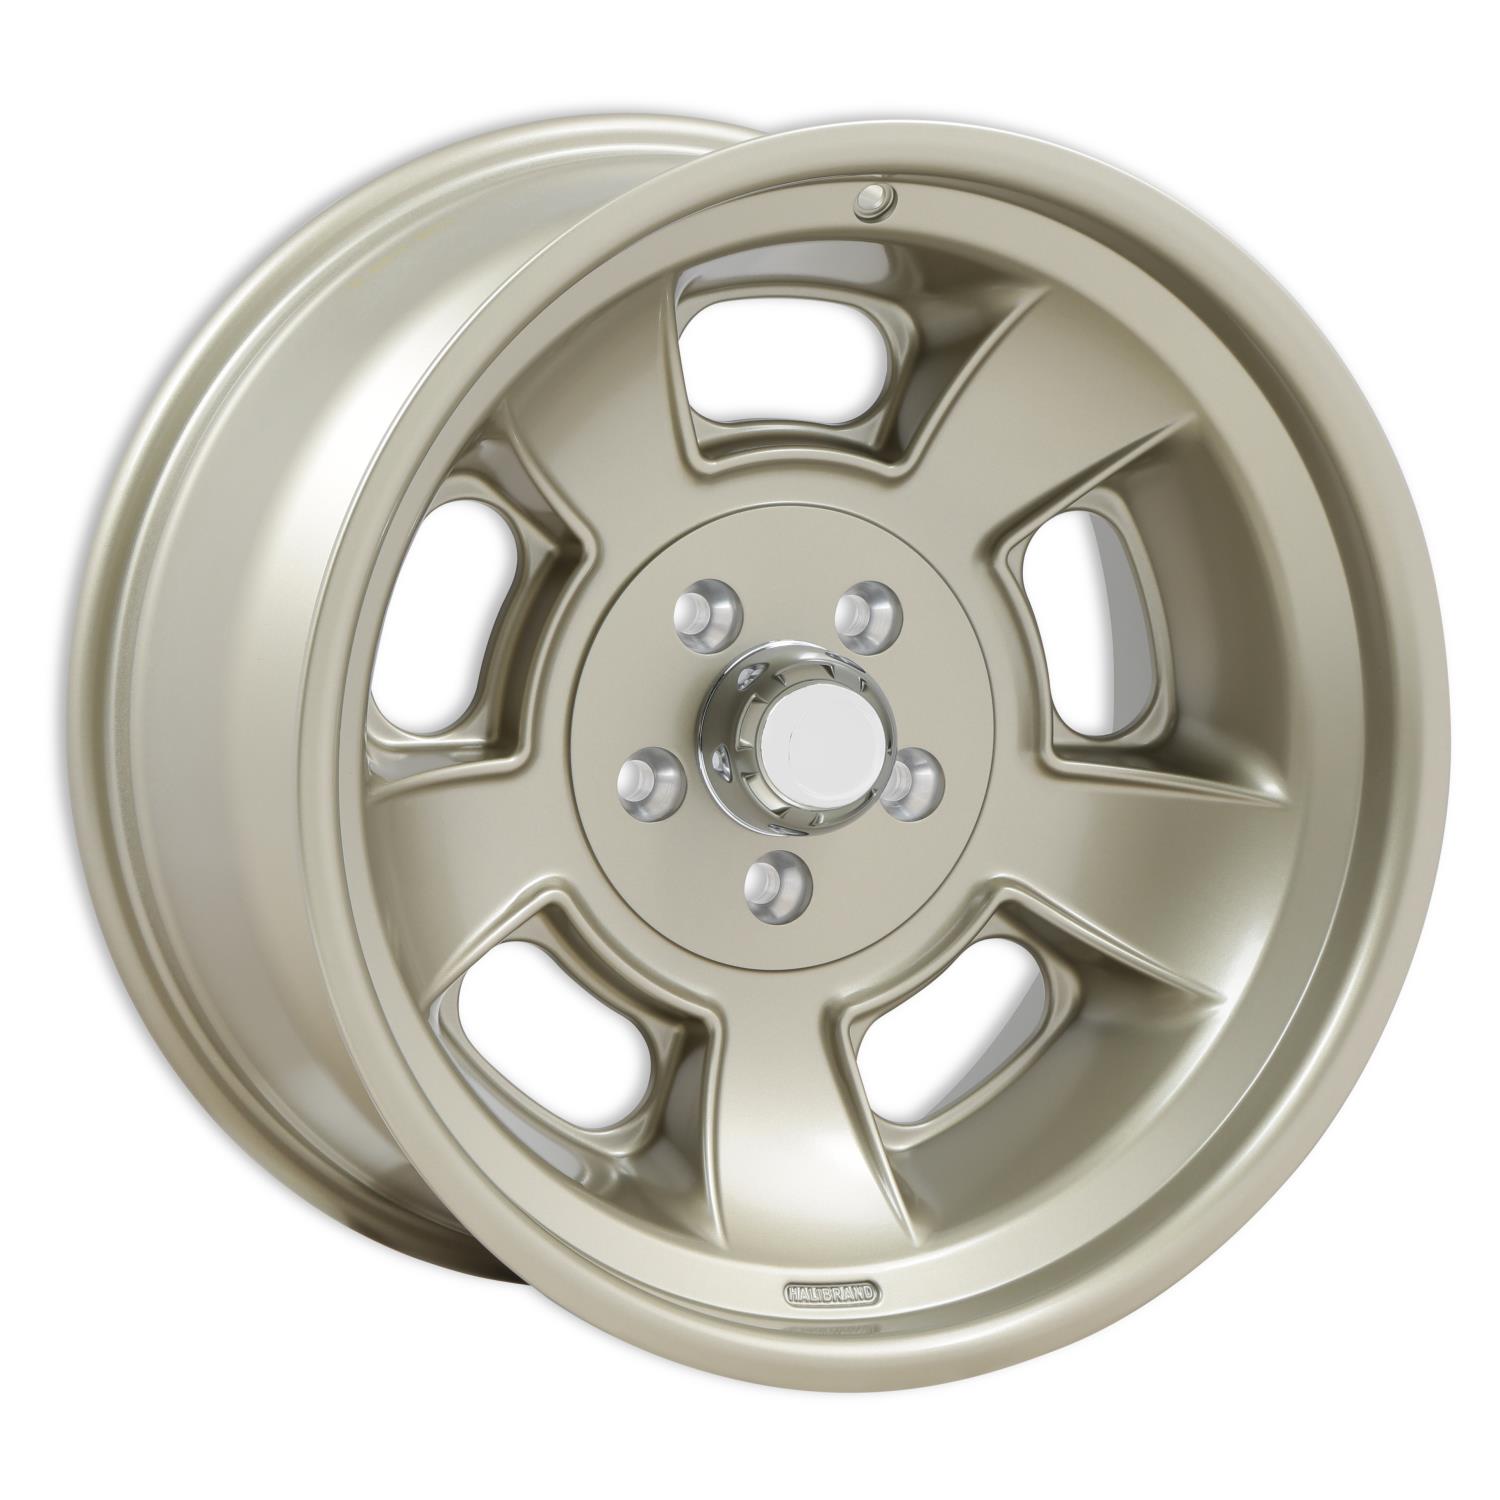 Sprint Rear Wheel, Size: 19x10", Bolt Pattern: 5x5", Backspace: 5.5" [MAG7 - Semi Gloss Clearcoat]